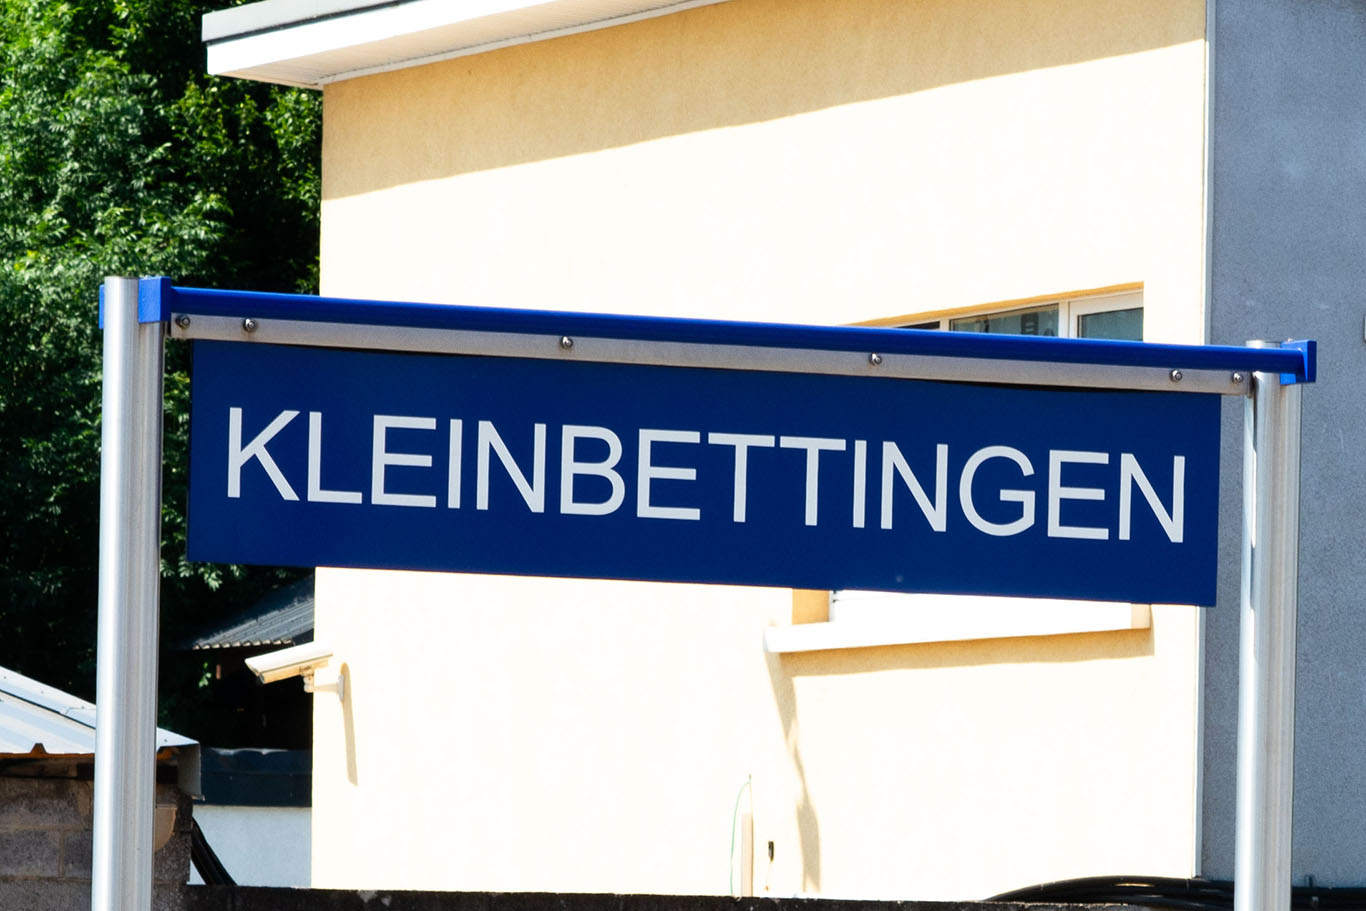 Fiduciaire Kleinbettingen Luxembourg - Perreaux - Kleinbettingen